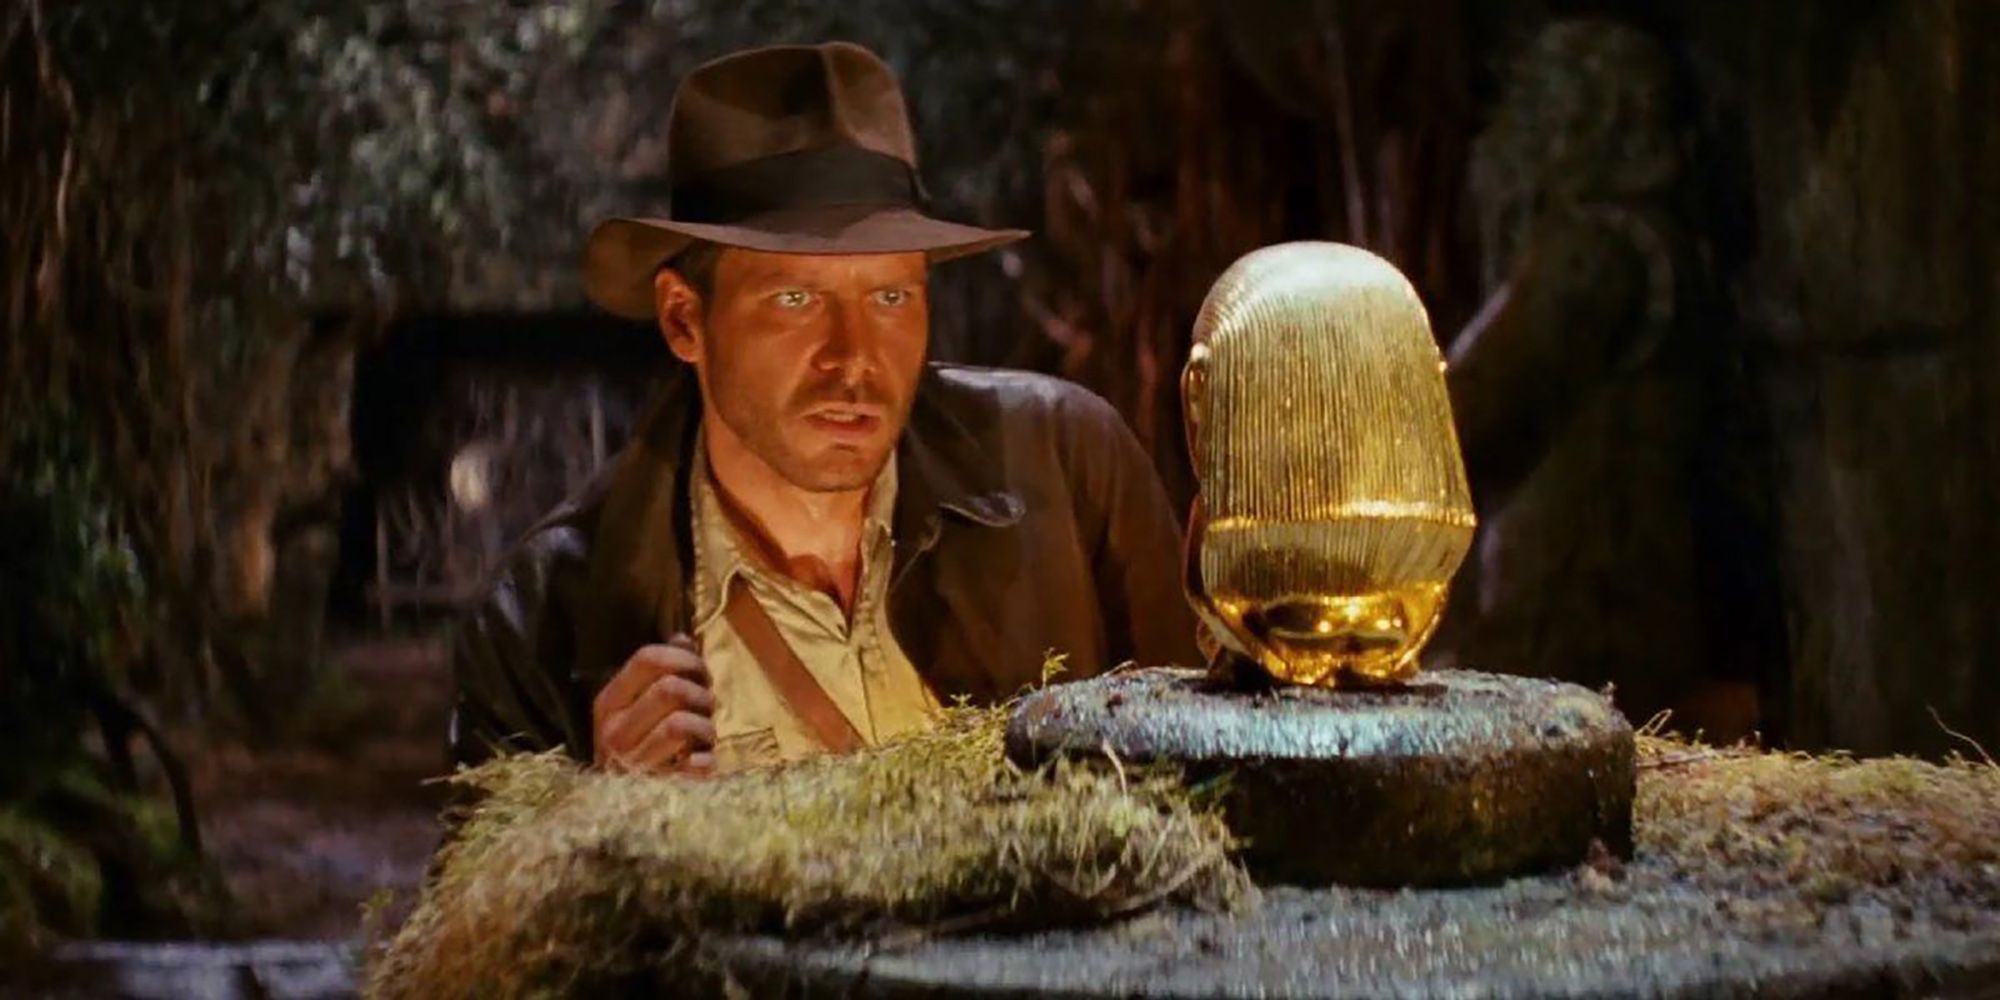 Indiana Jones In Raiders of the Lost Ark